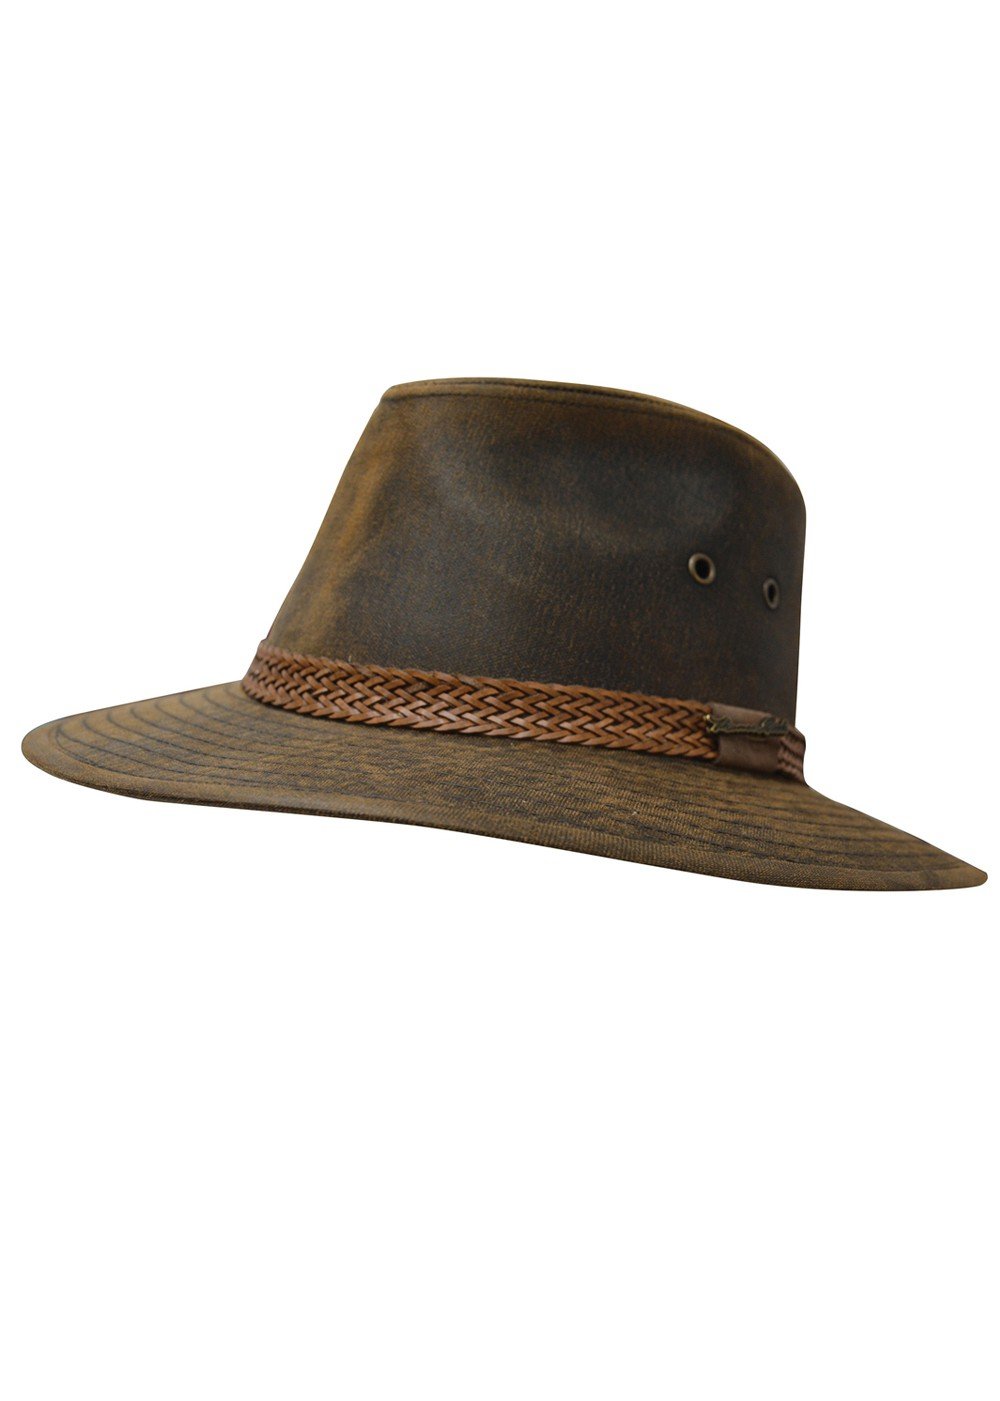 Thomas Cook Mens Mansfield Hat - Rustic Brown